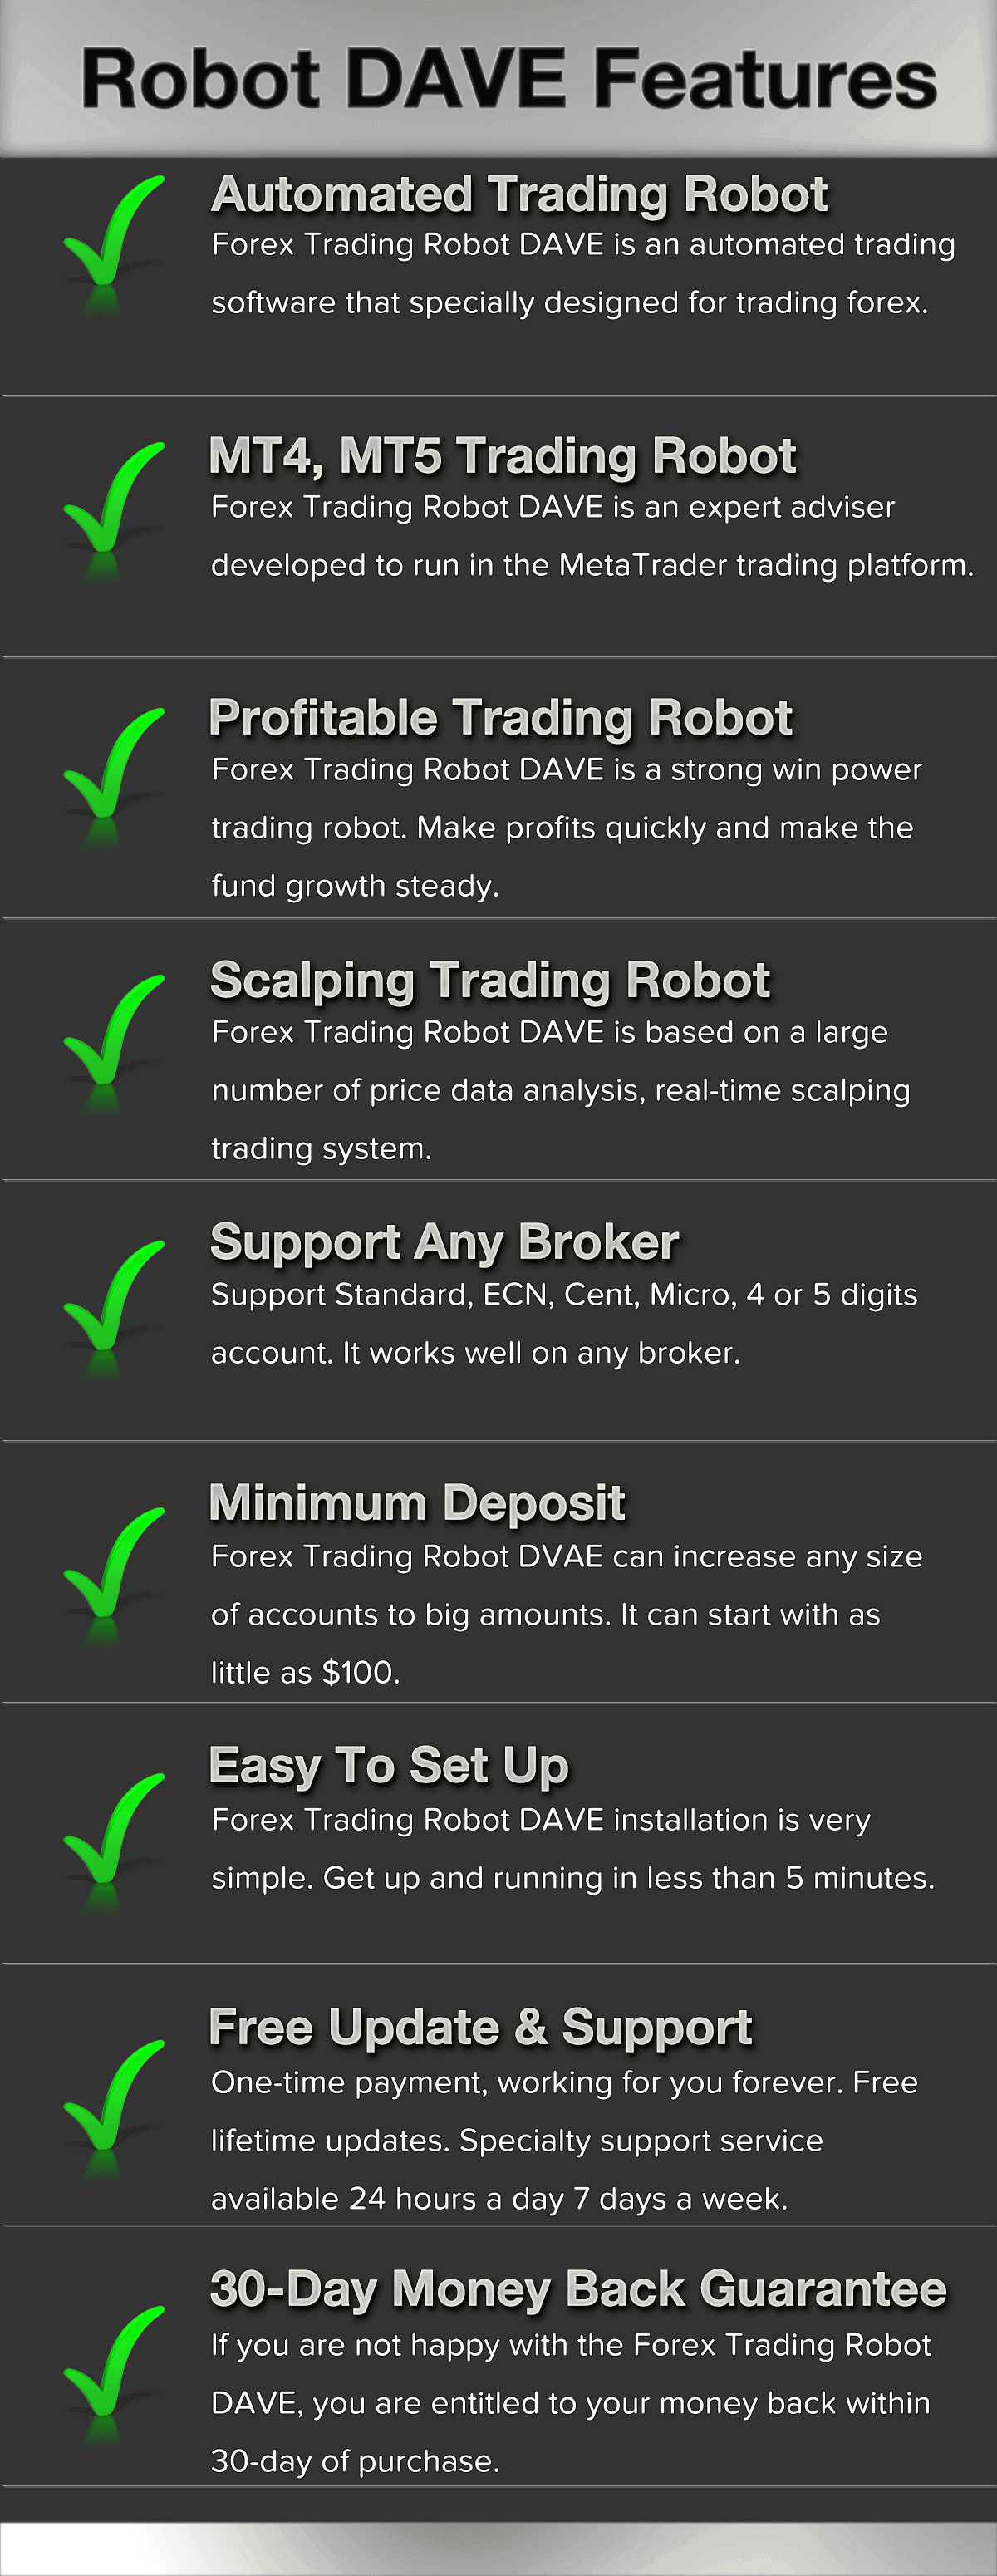 Forex trading robot dave